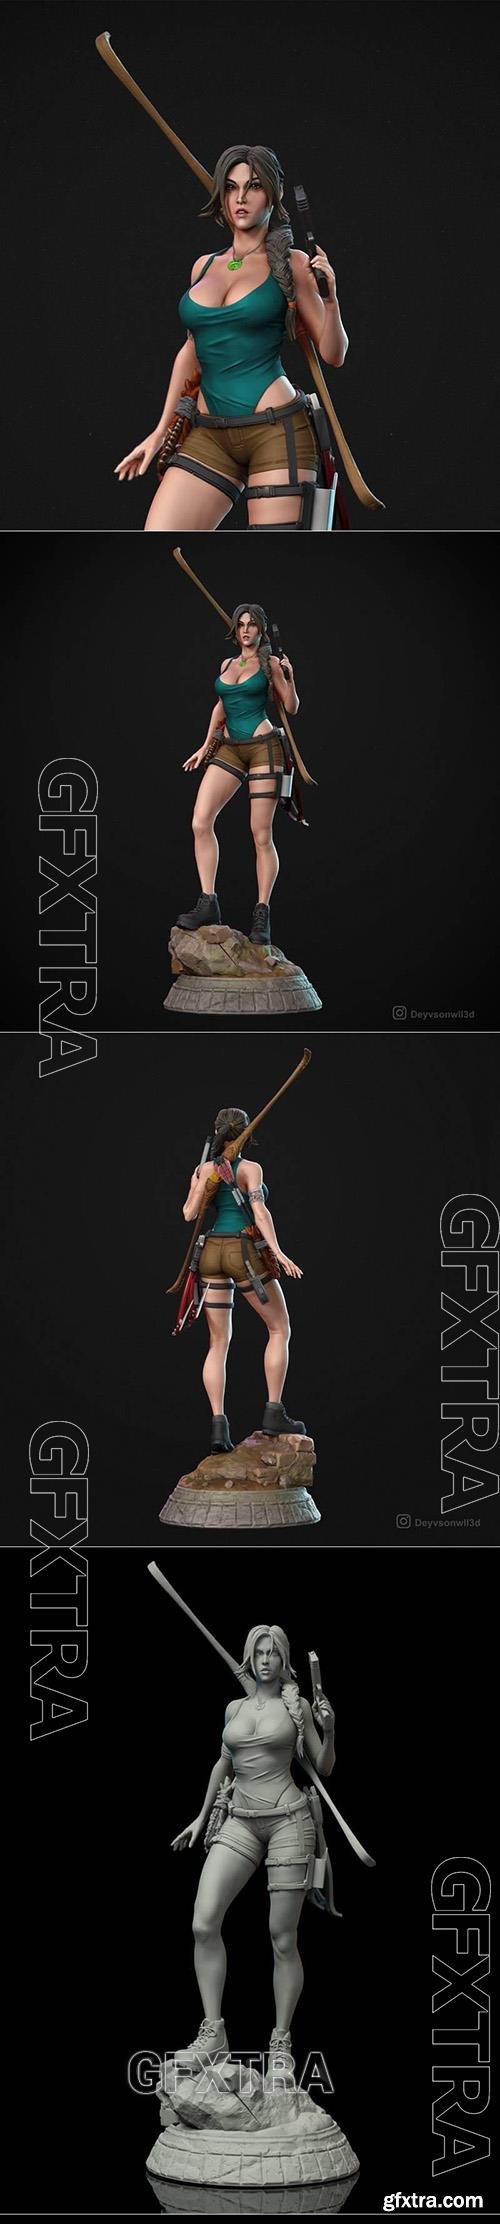 Lara Croft Tomb Raider Fan Art Statue 3D Printable